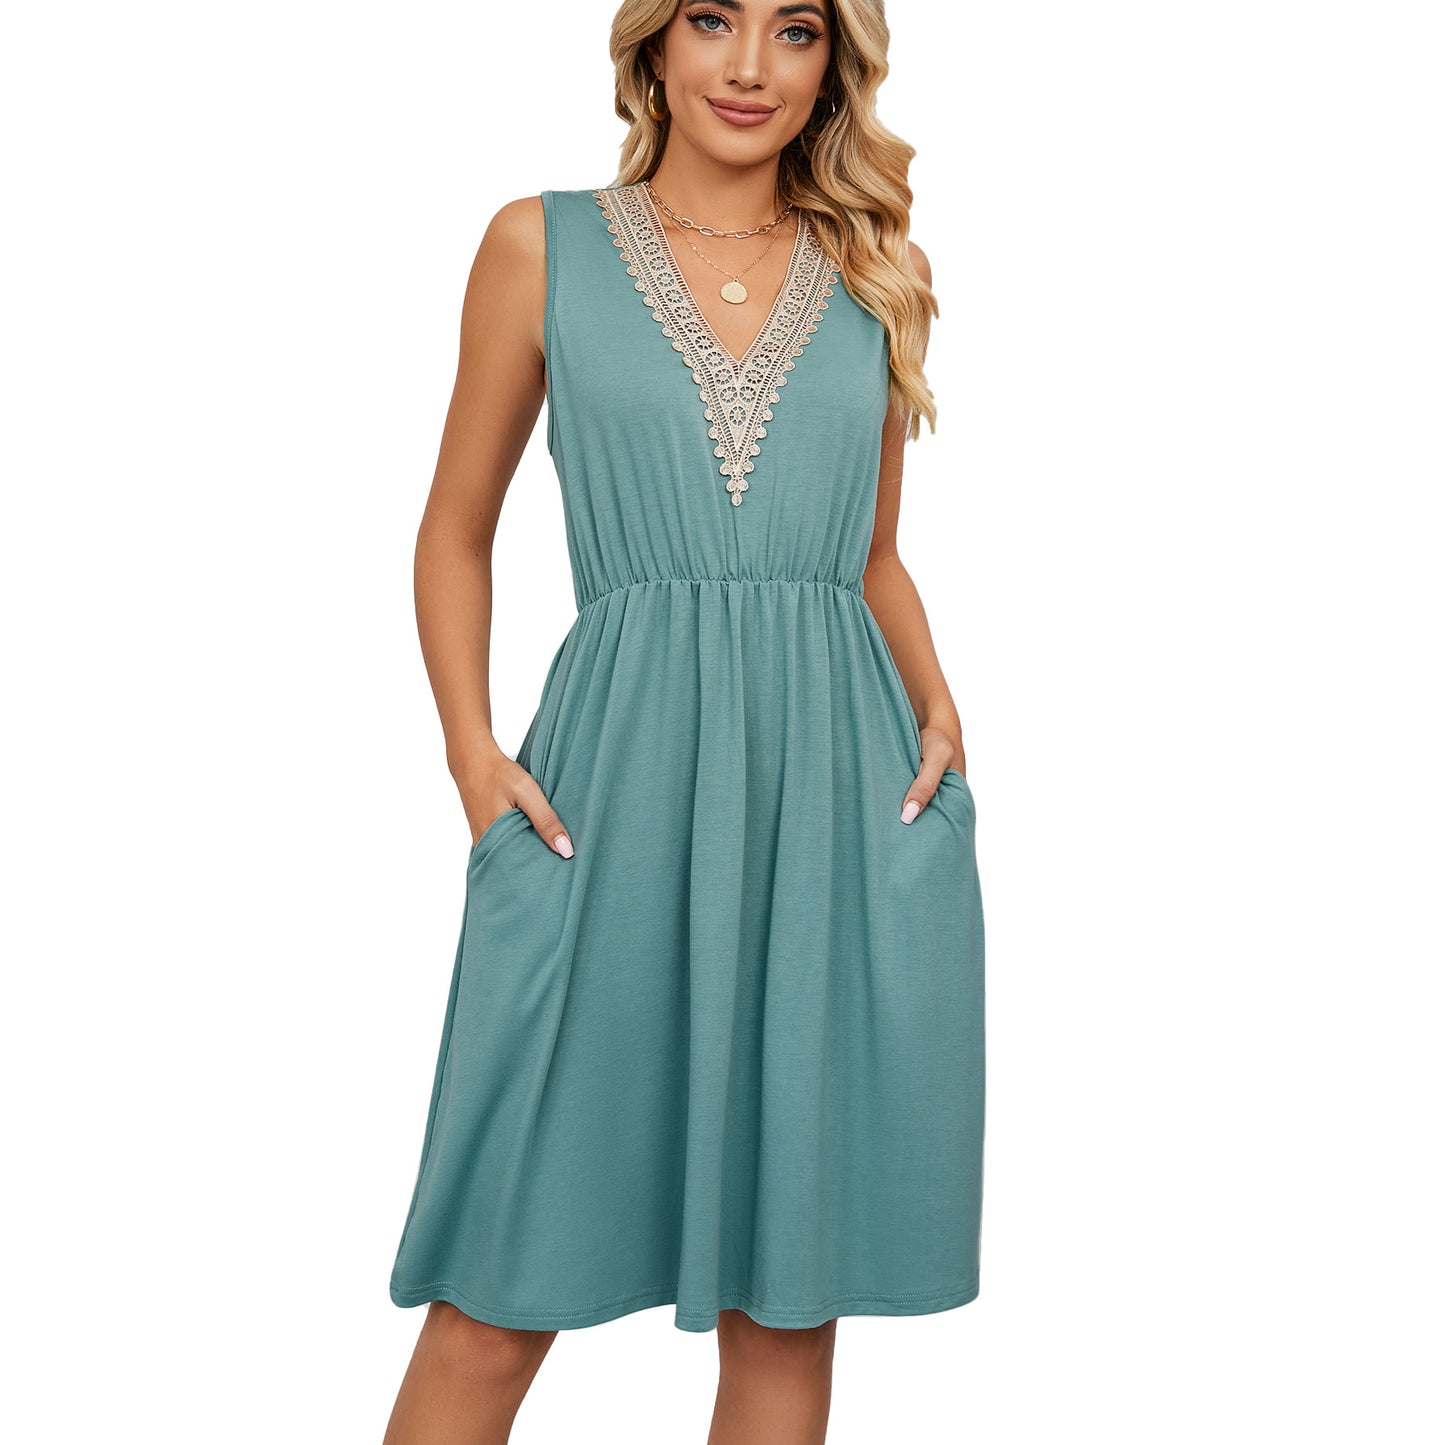 Lace Panel Sleeveless Dresss